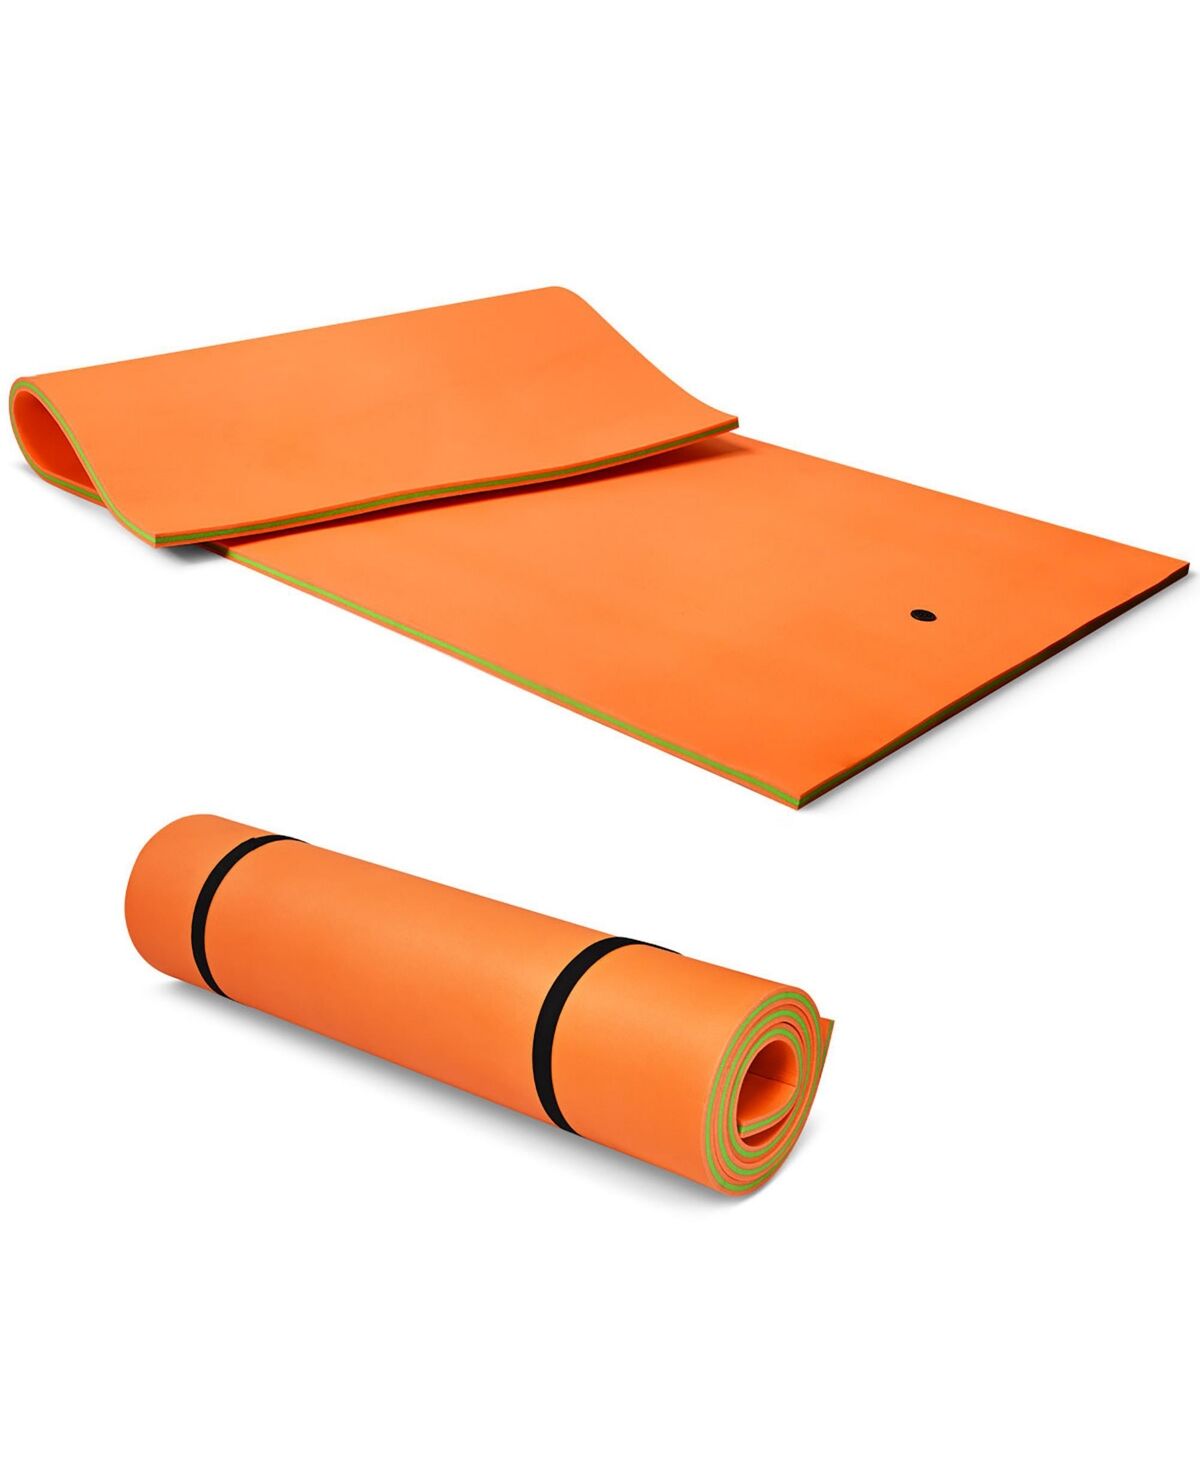 Costway 3-Layer Floating Water Pad 12' x 6' Floating Oasis Foam Mat - Orange